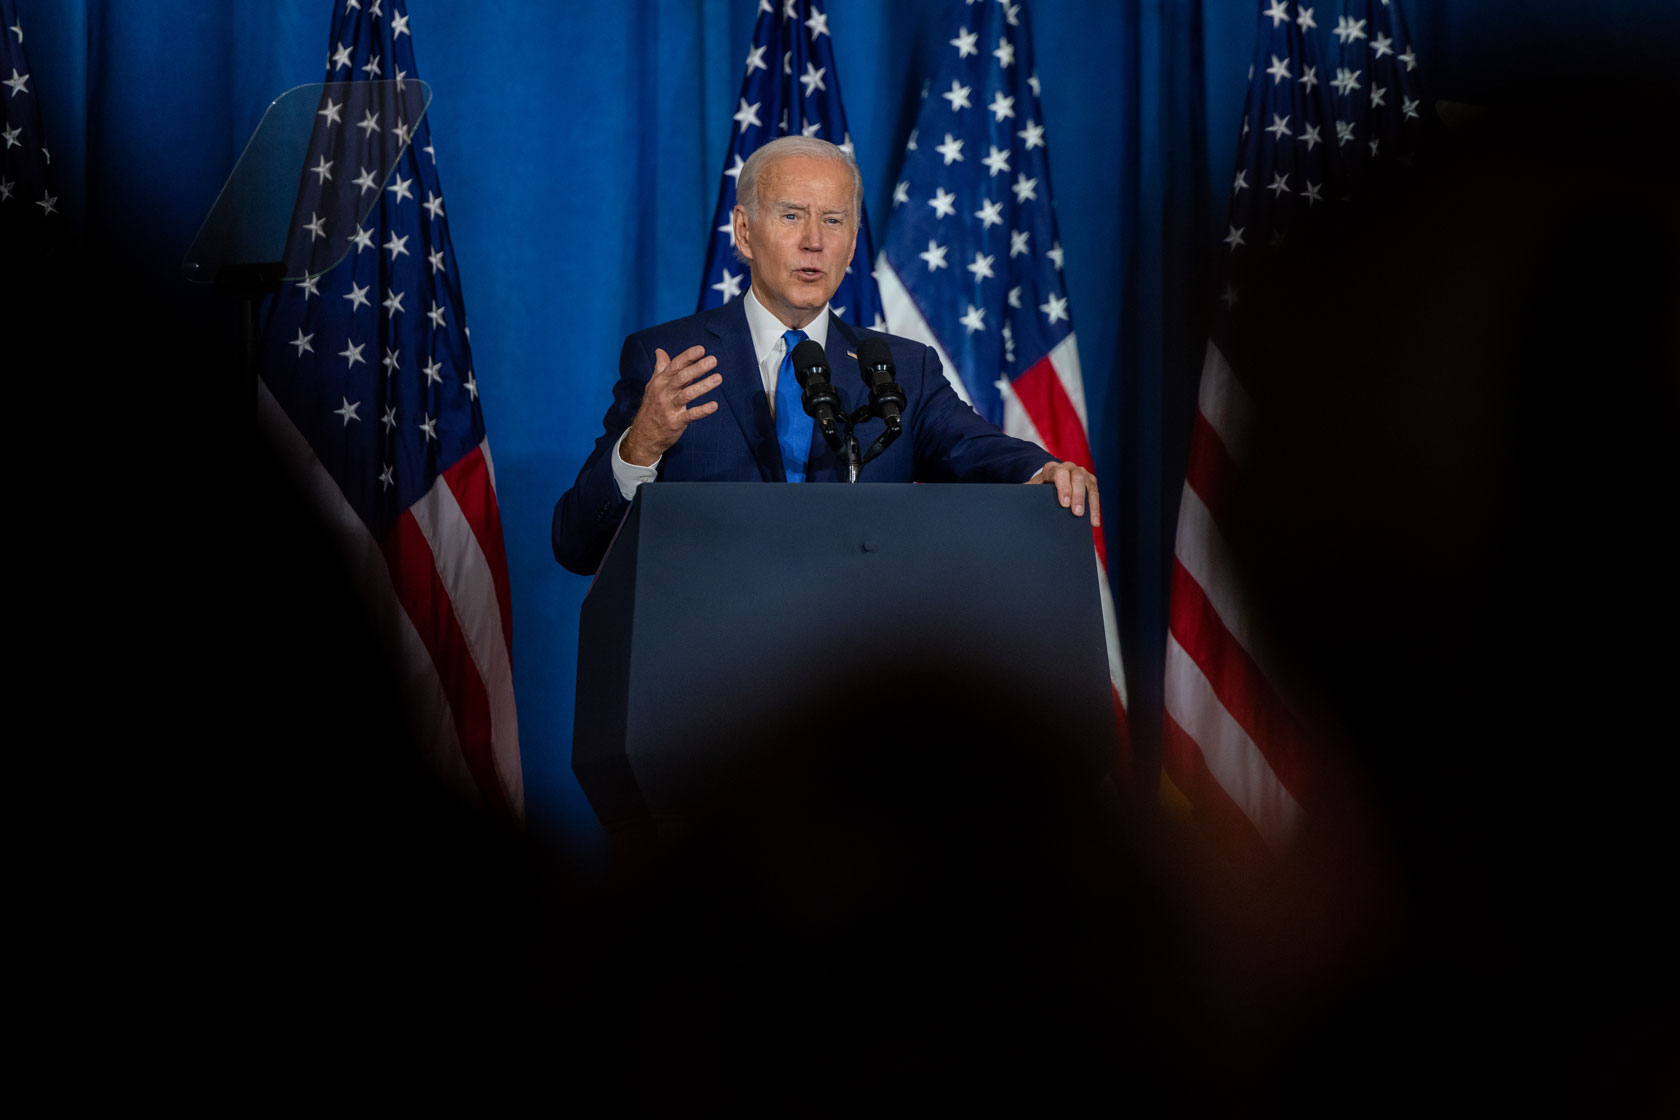 President Joe Biden speaks on preserving democracy at a rally.